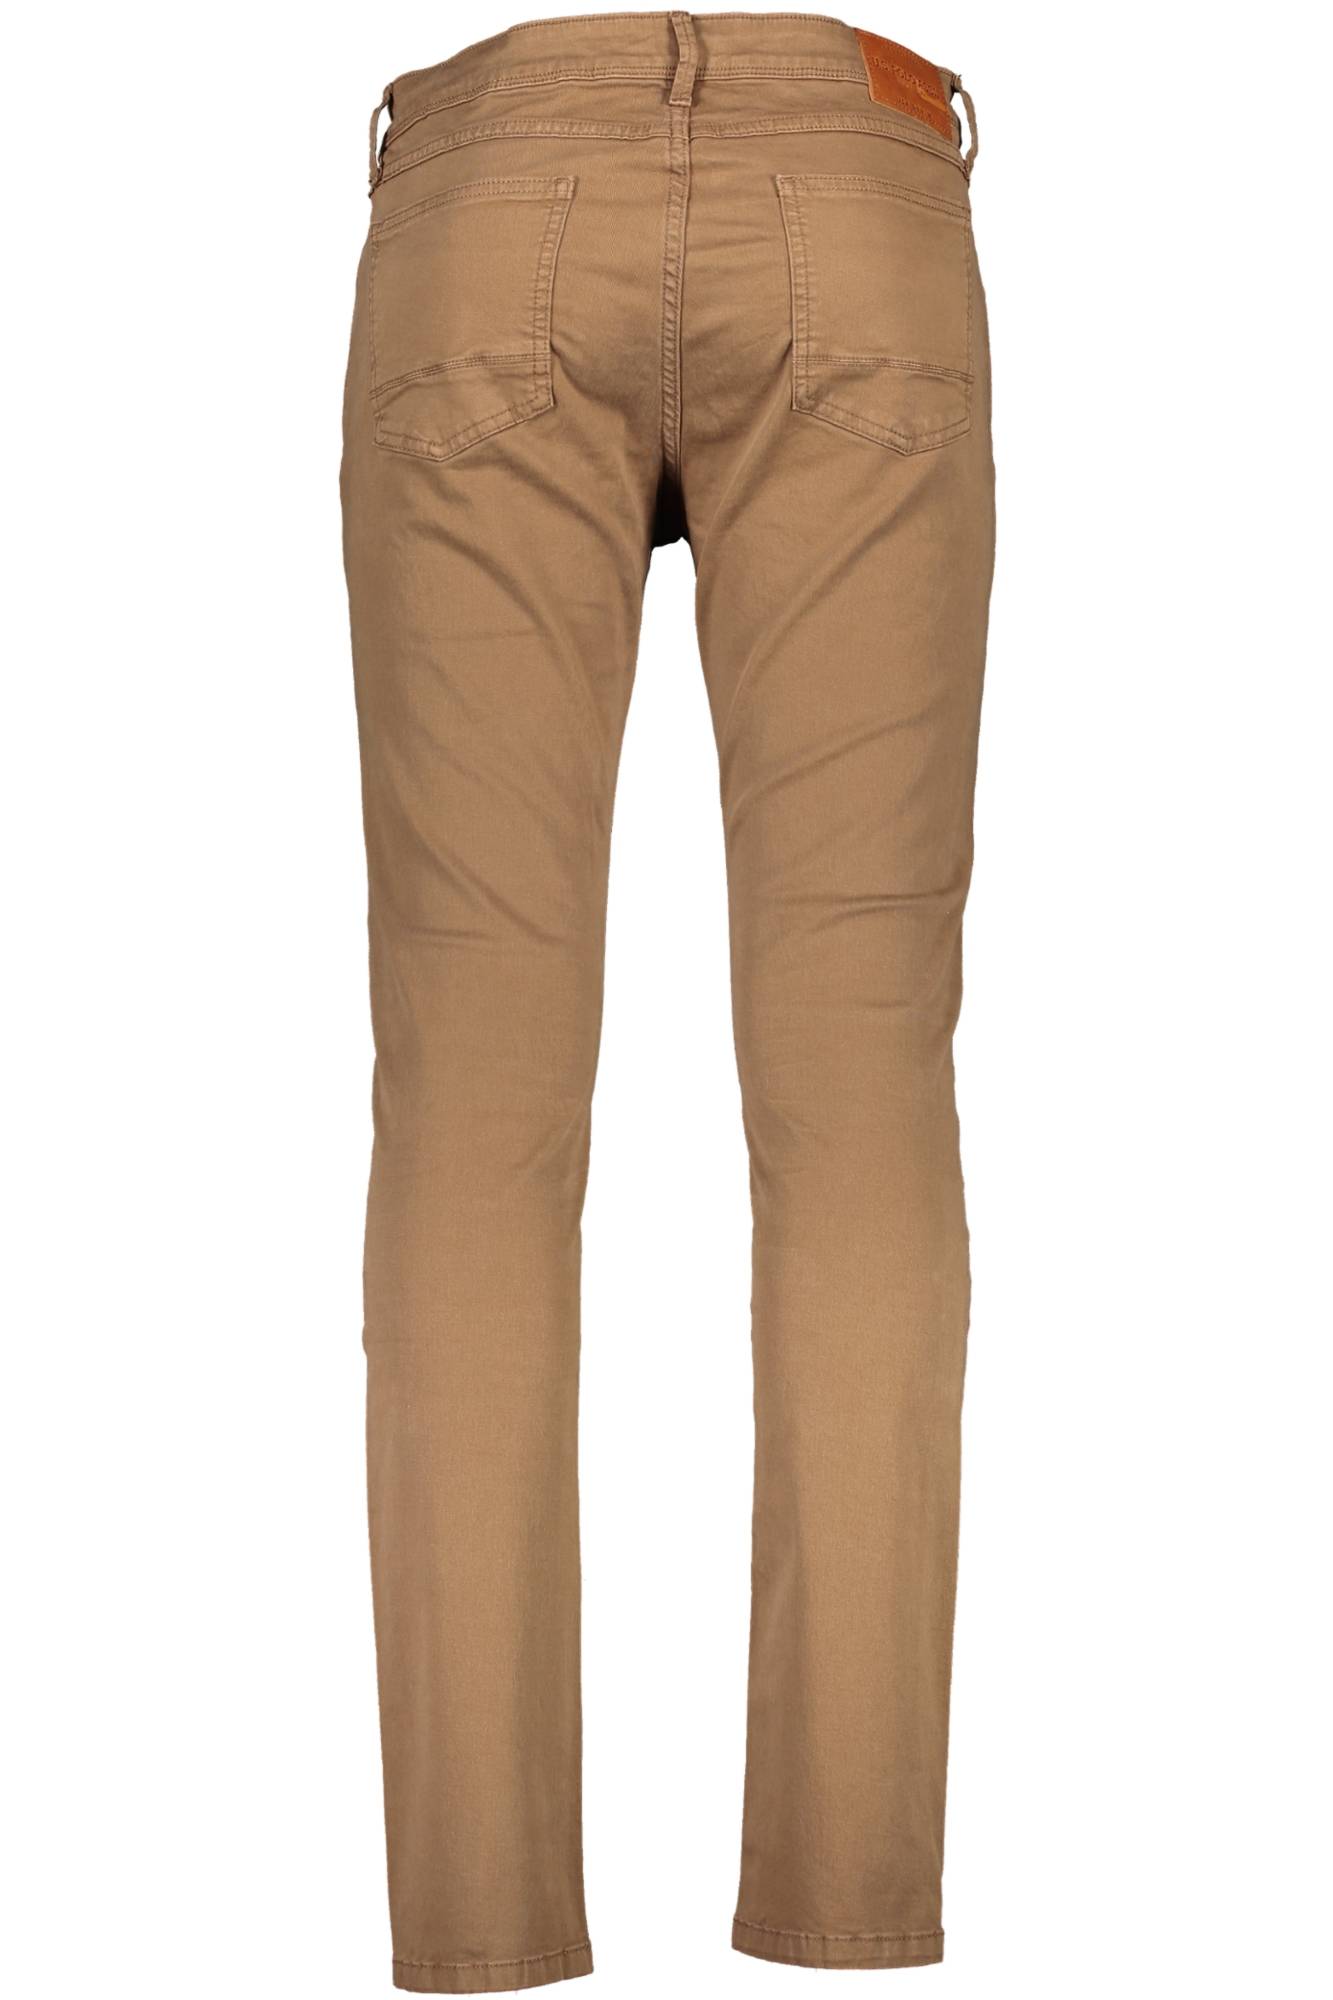 U.S. POLO ASSN. Brown Jeans & Pant - Fizigo